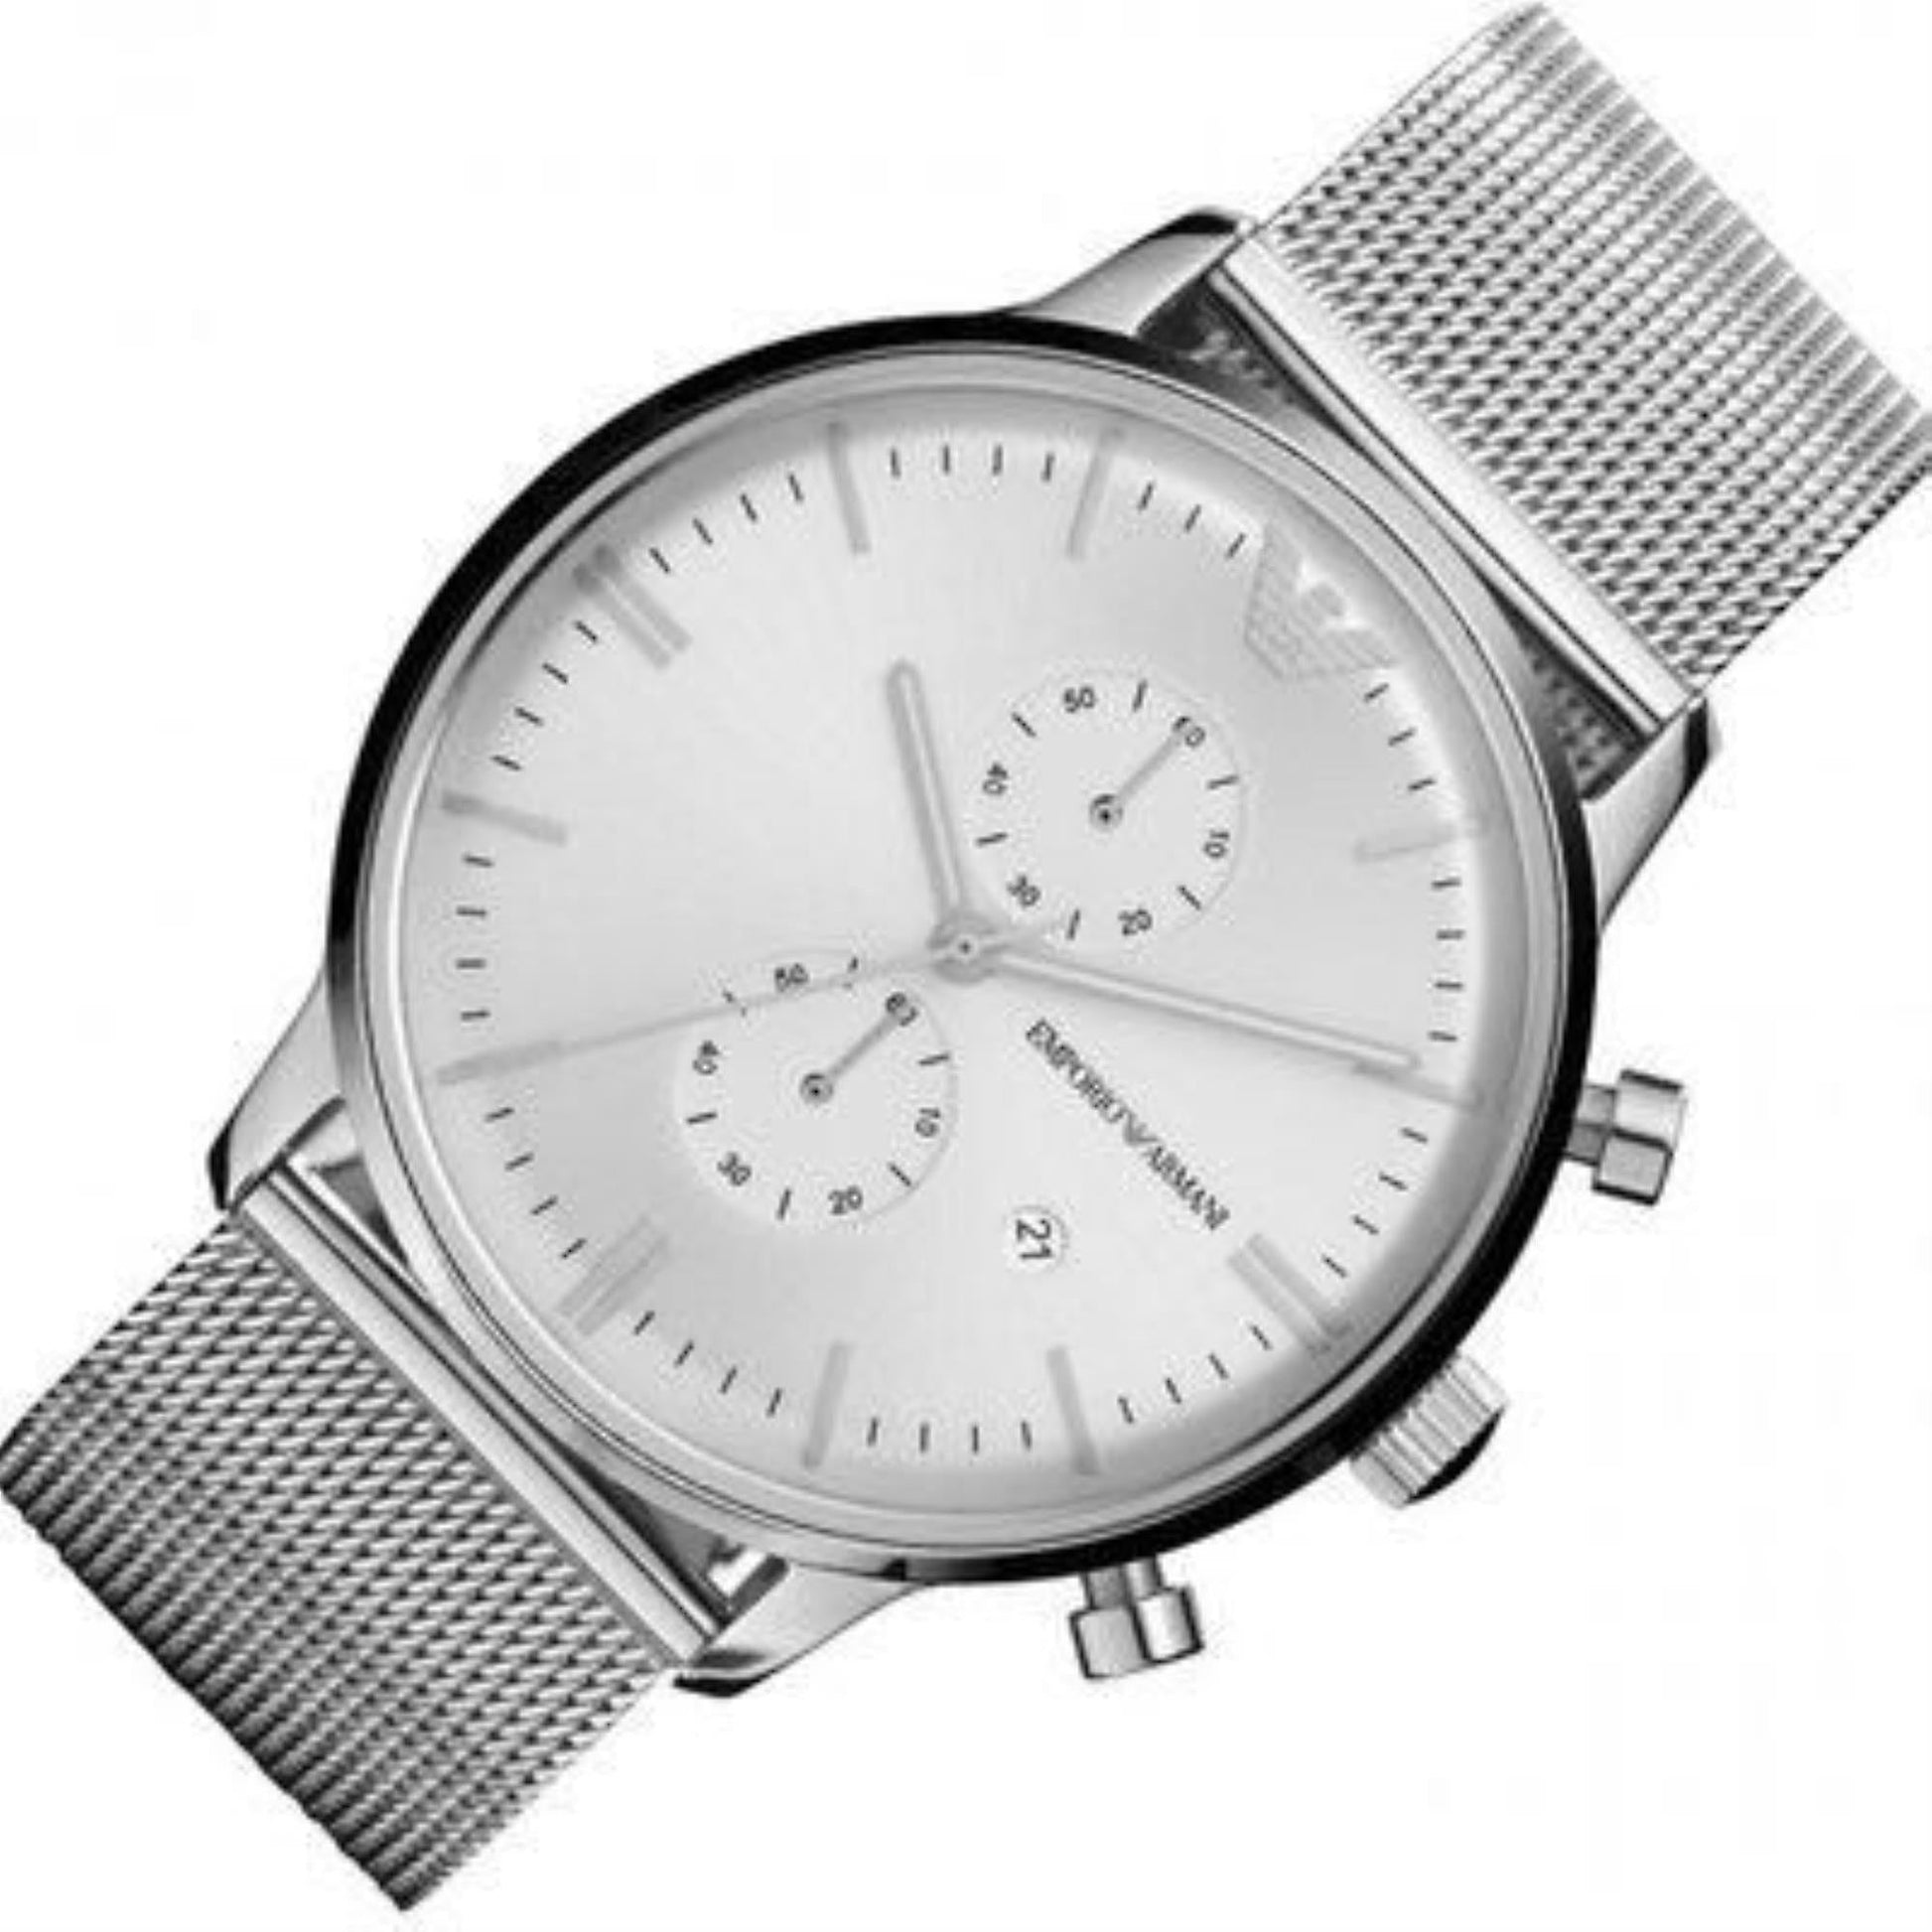 Emporio Armani Classic Chronograph Quartz Silver Dial Silver Mesh Bracelet Watch For Men - AR0390